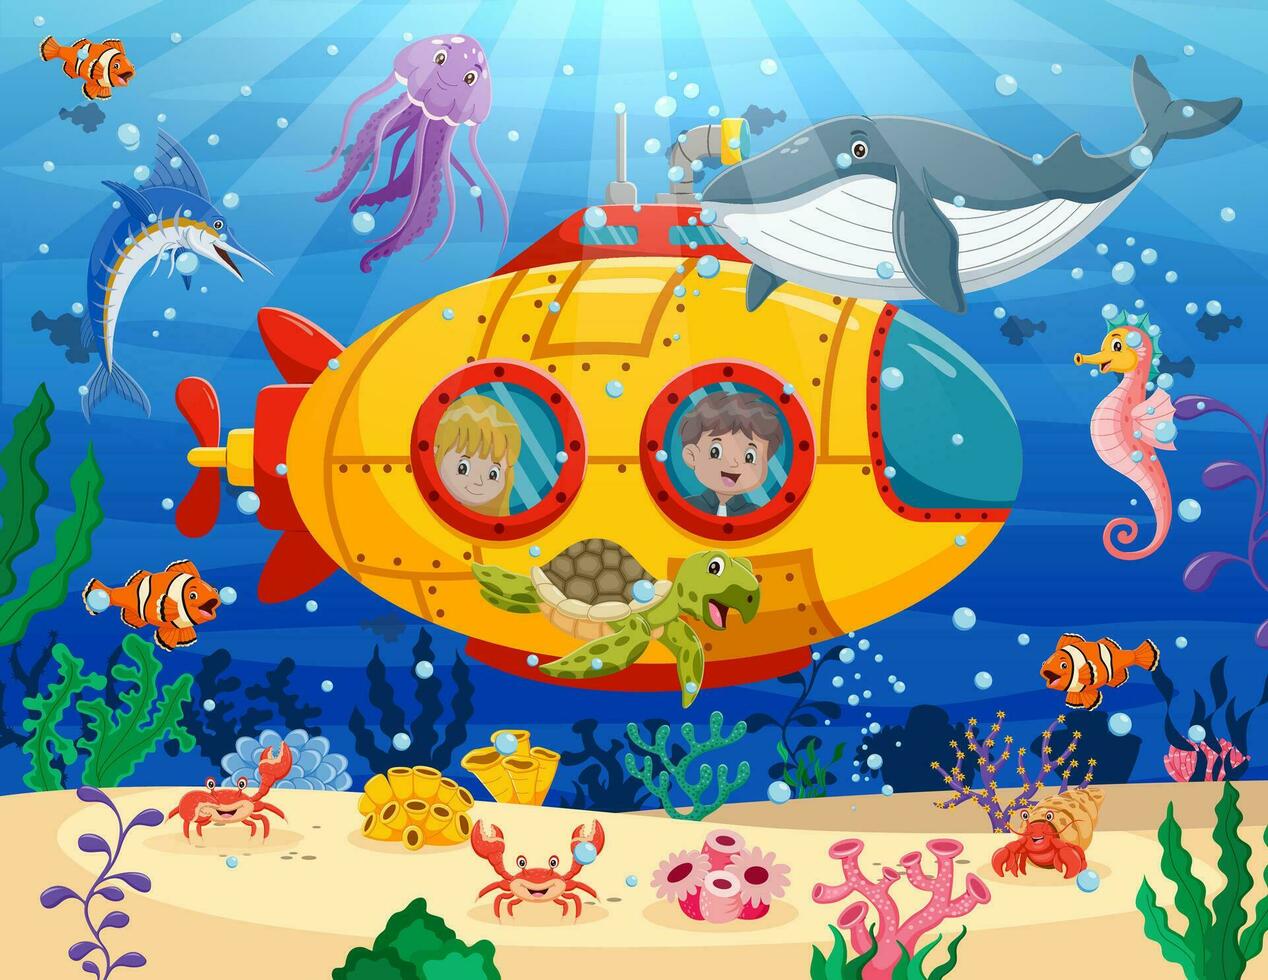 Cartoon Submarine Under The Sea. Small inquisitive children on bathyscaphe explore underwater world. Vector illustration